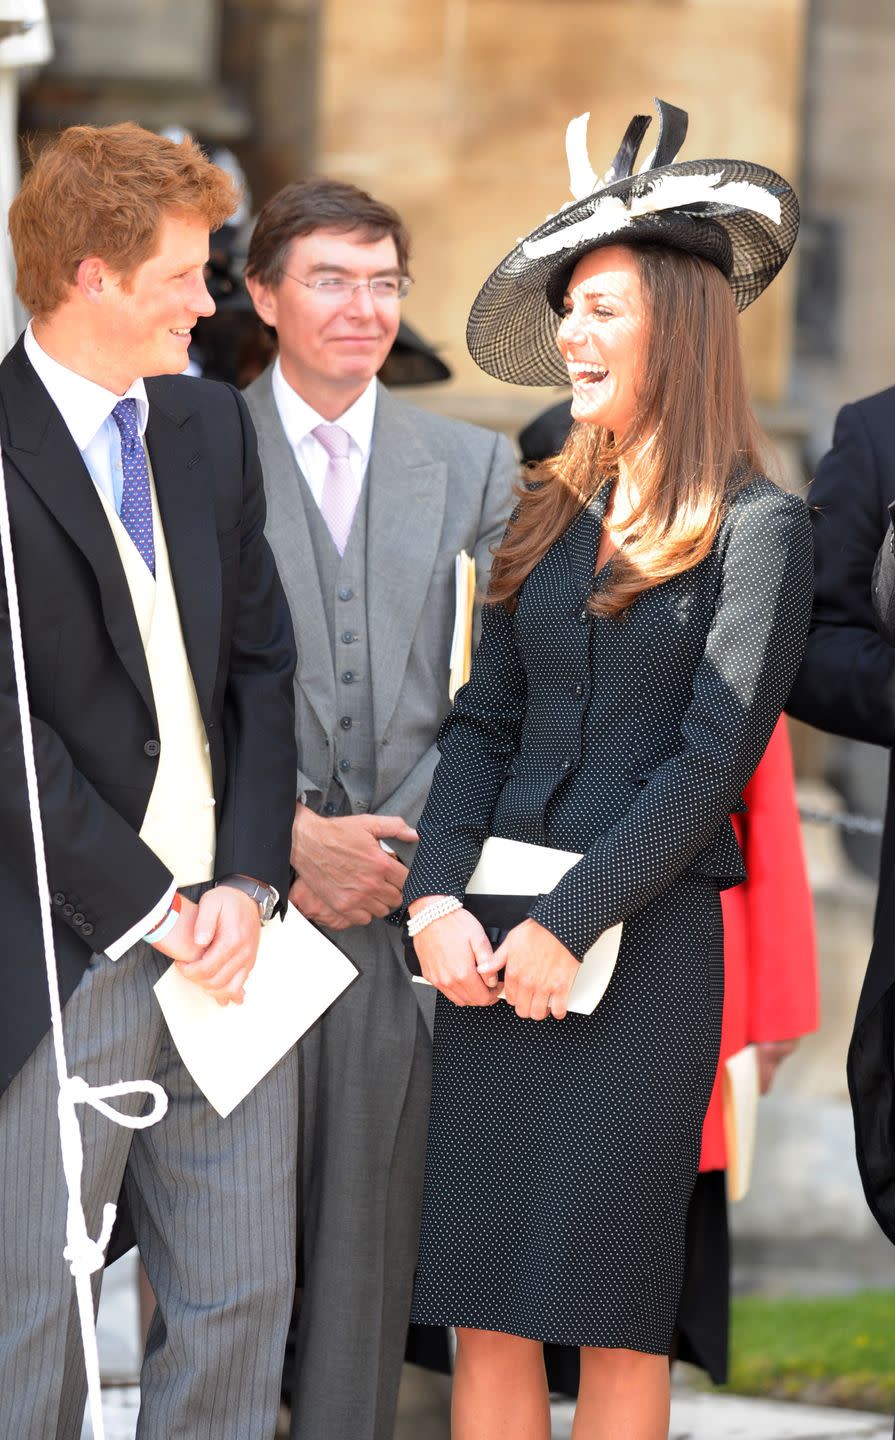 royals attend order of the garter service